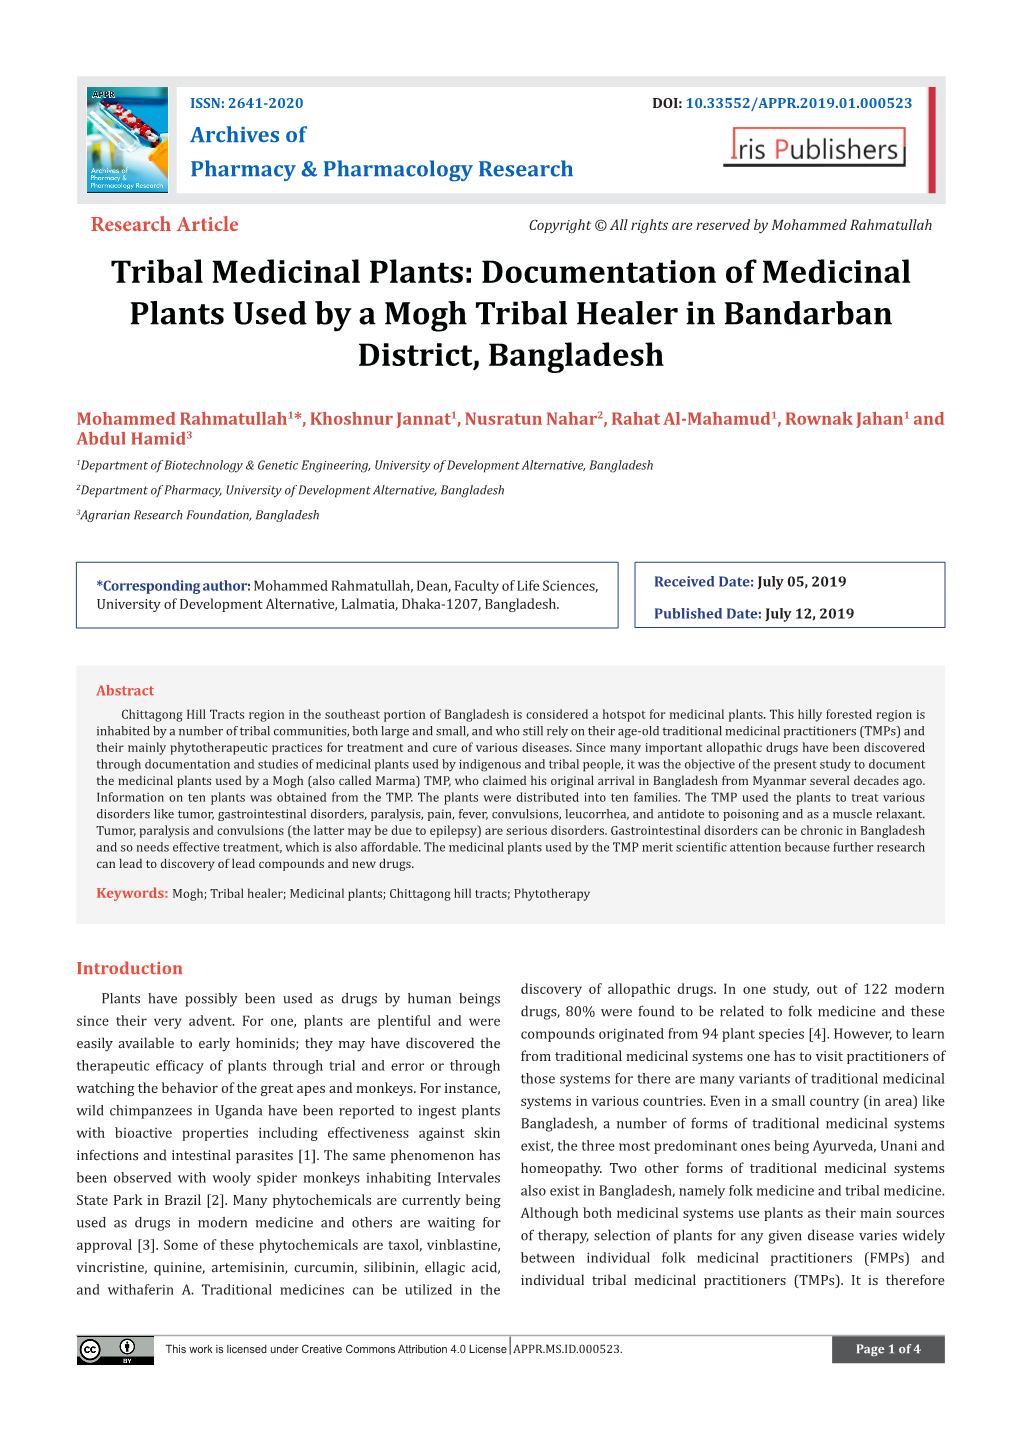 Tribal Medicinal Plants: Documentation of Medicinal Plants Used by a Mogh Tribal Healer in Bandarban District, Bangladesh